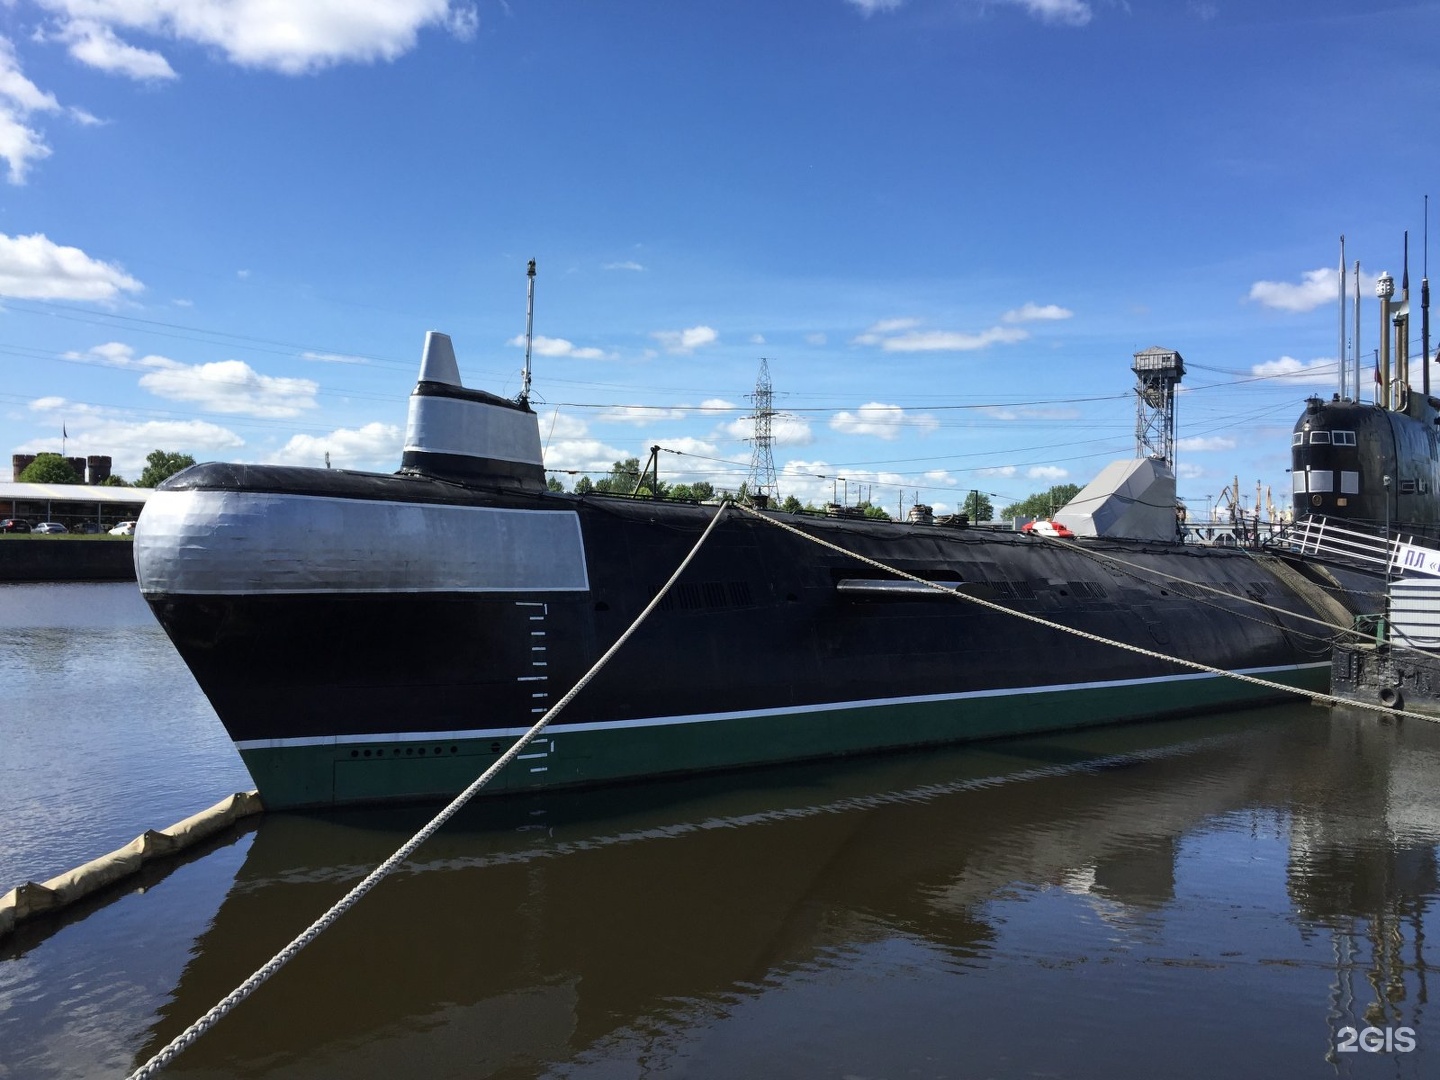 Подводная лодка б 413 калининград фото